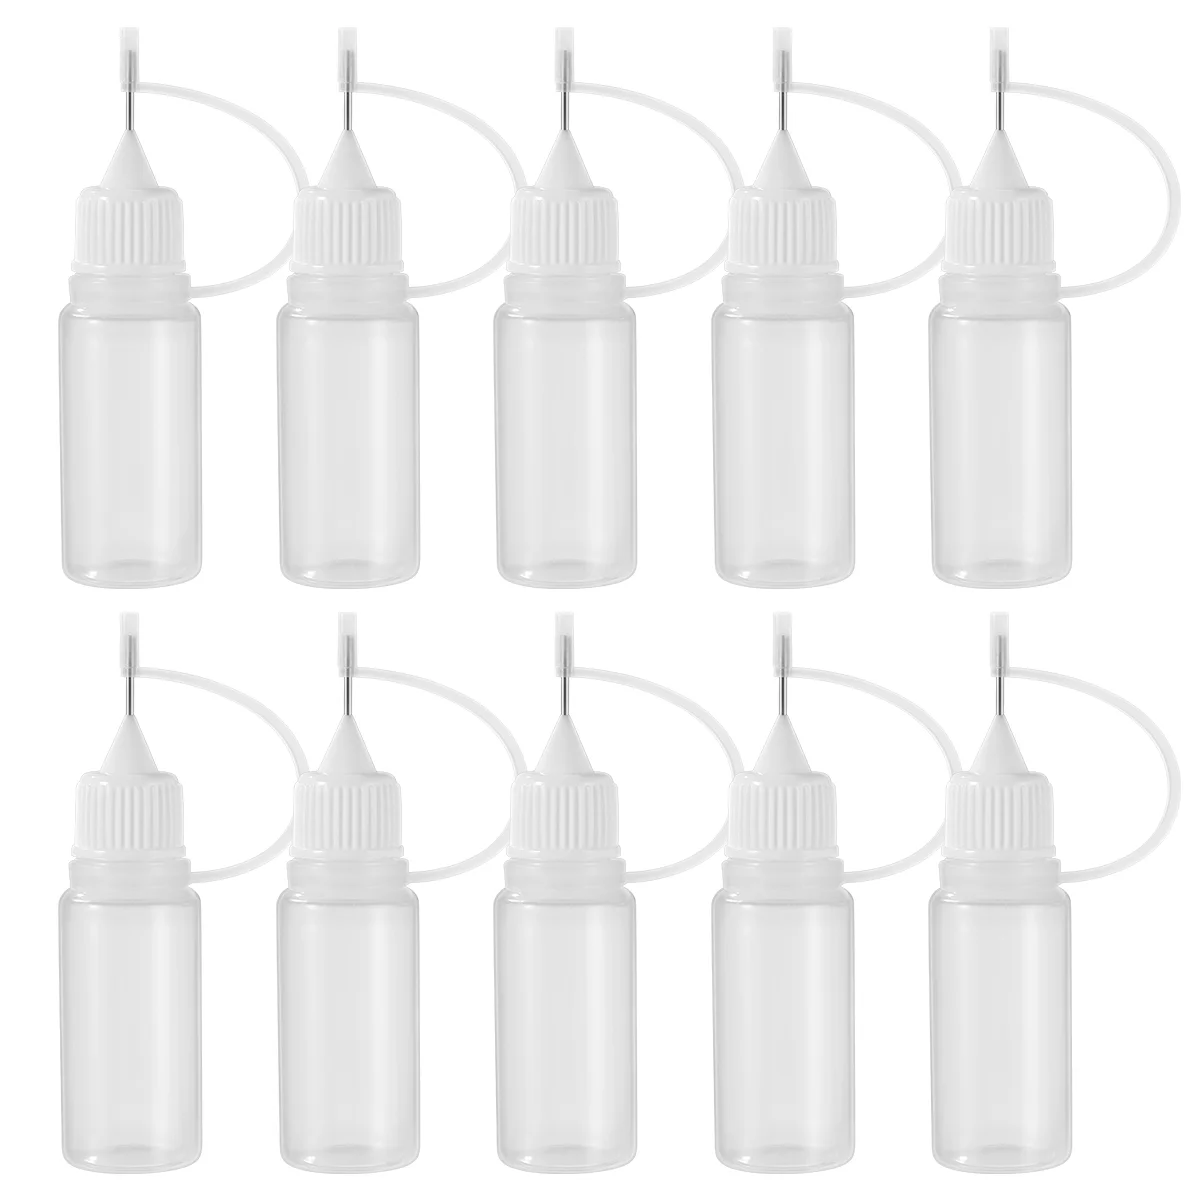 

ULTNICE 10Pcs 10ml Needle Tip Glue Bottles Liquid Needle Bottles Applicator DIY Empty Bottles for Home Workplace (White)